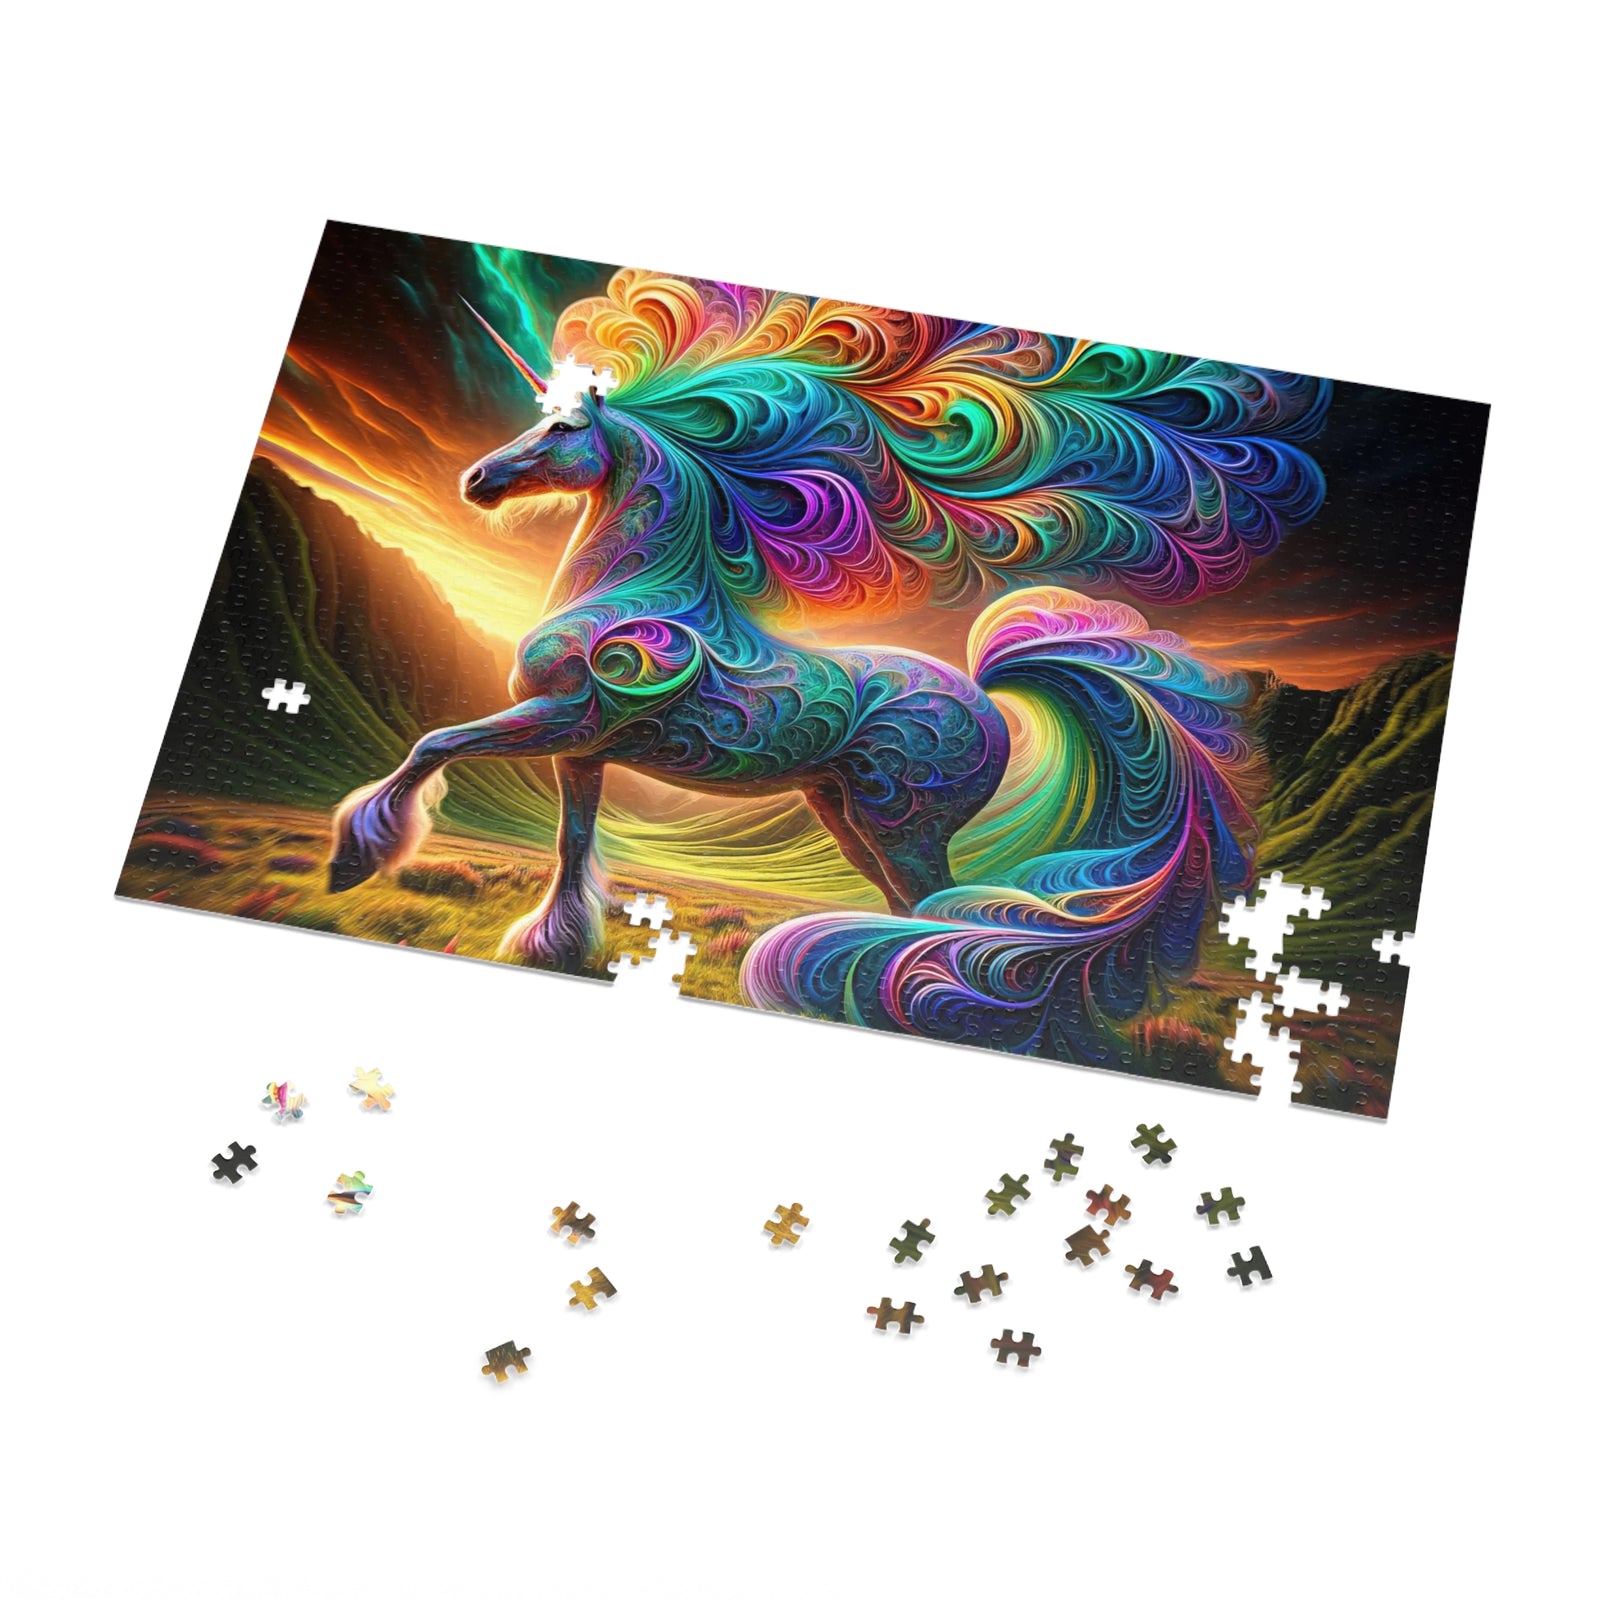 The Fractal Unicorn Jigsaw Puzzle